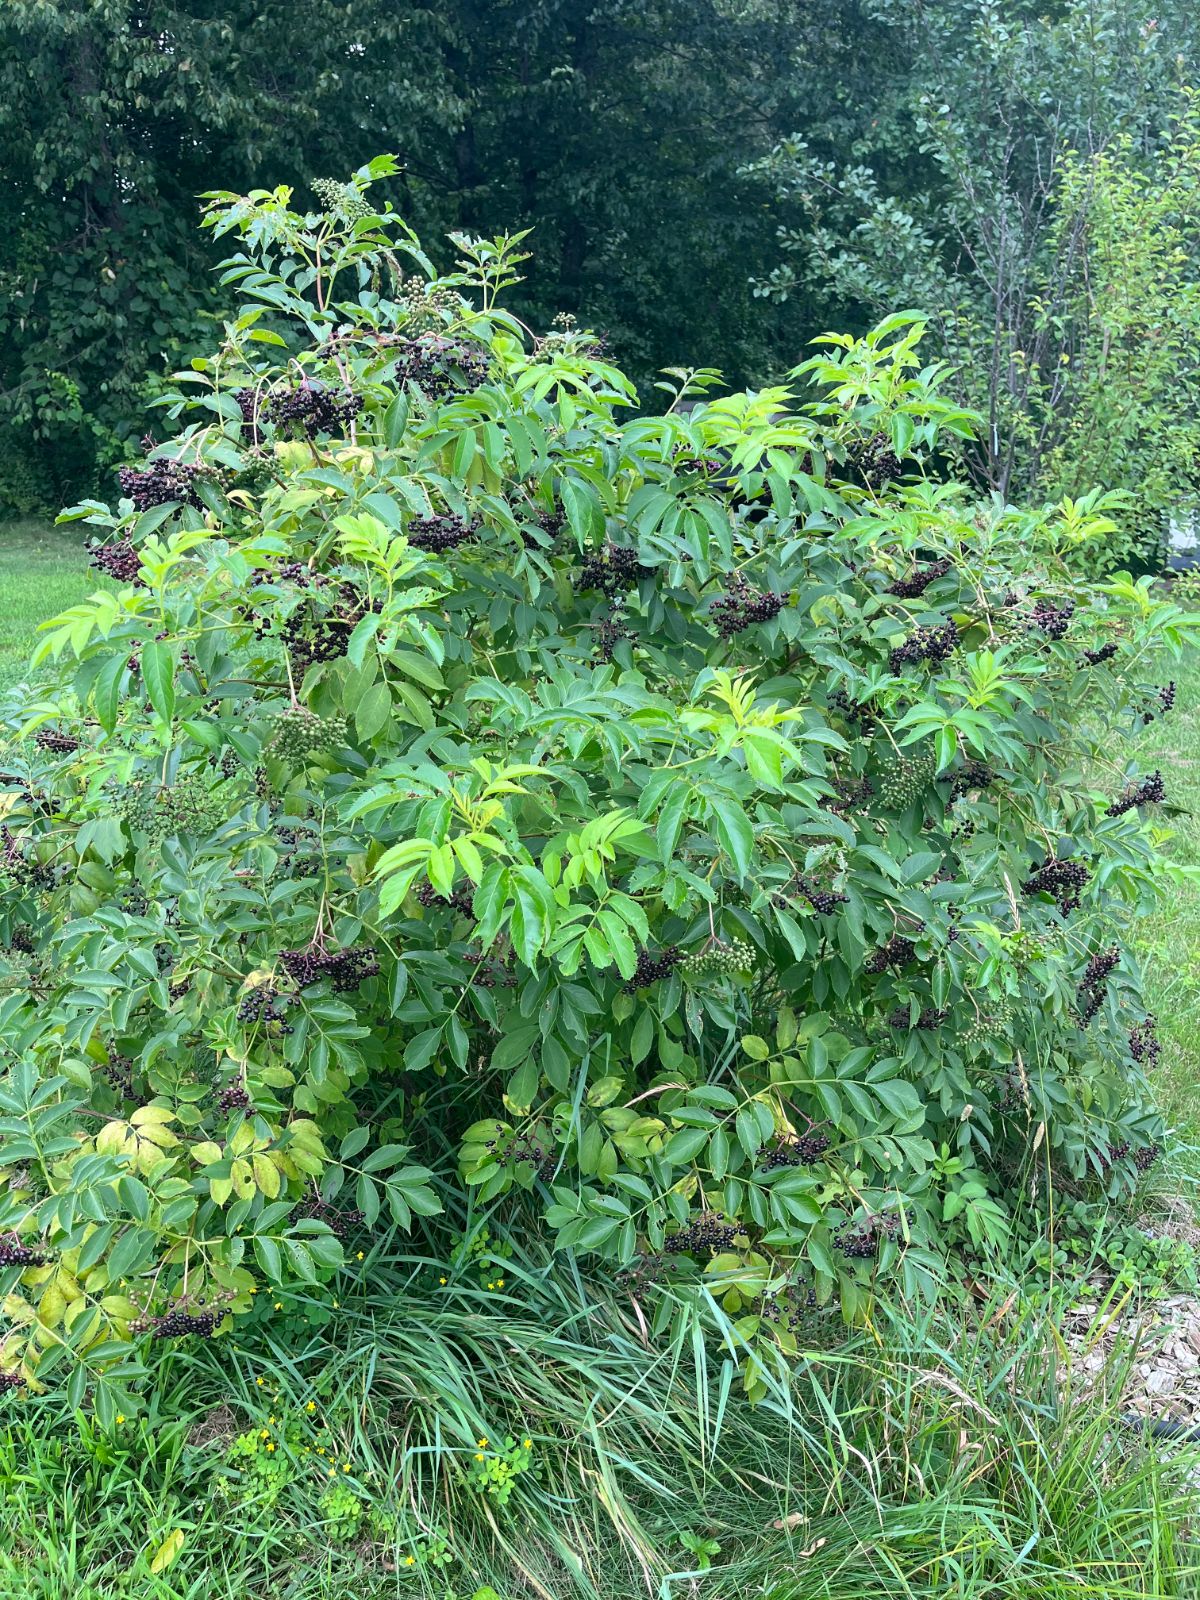 A nice native elderberry bush